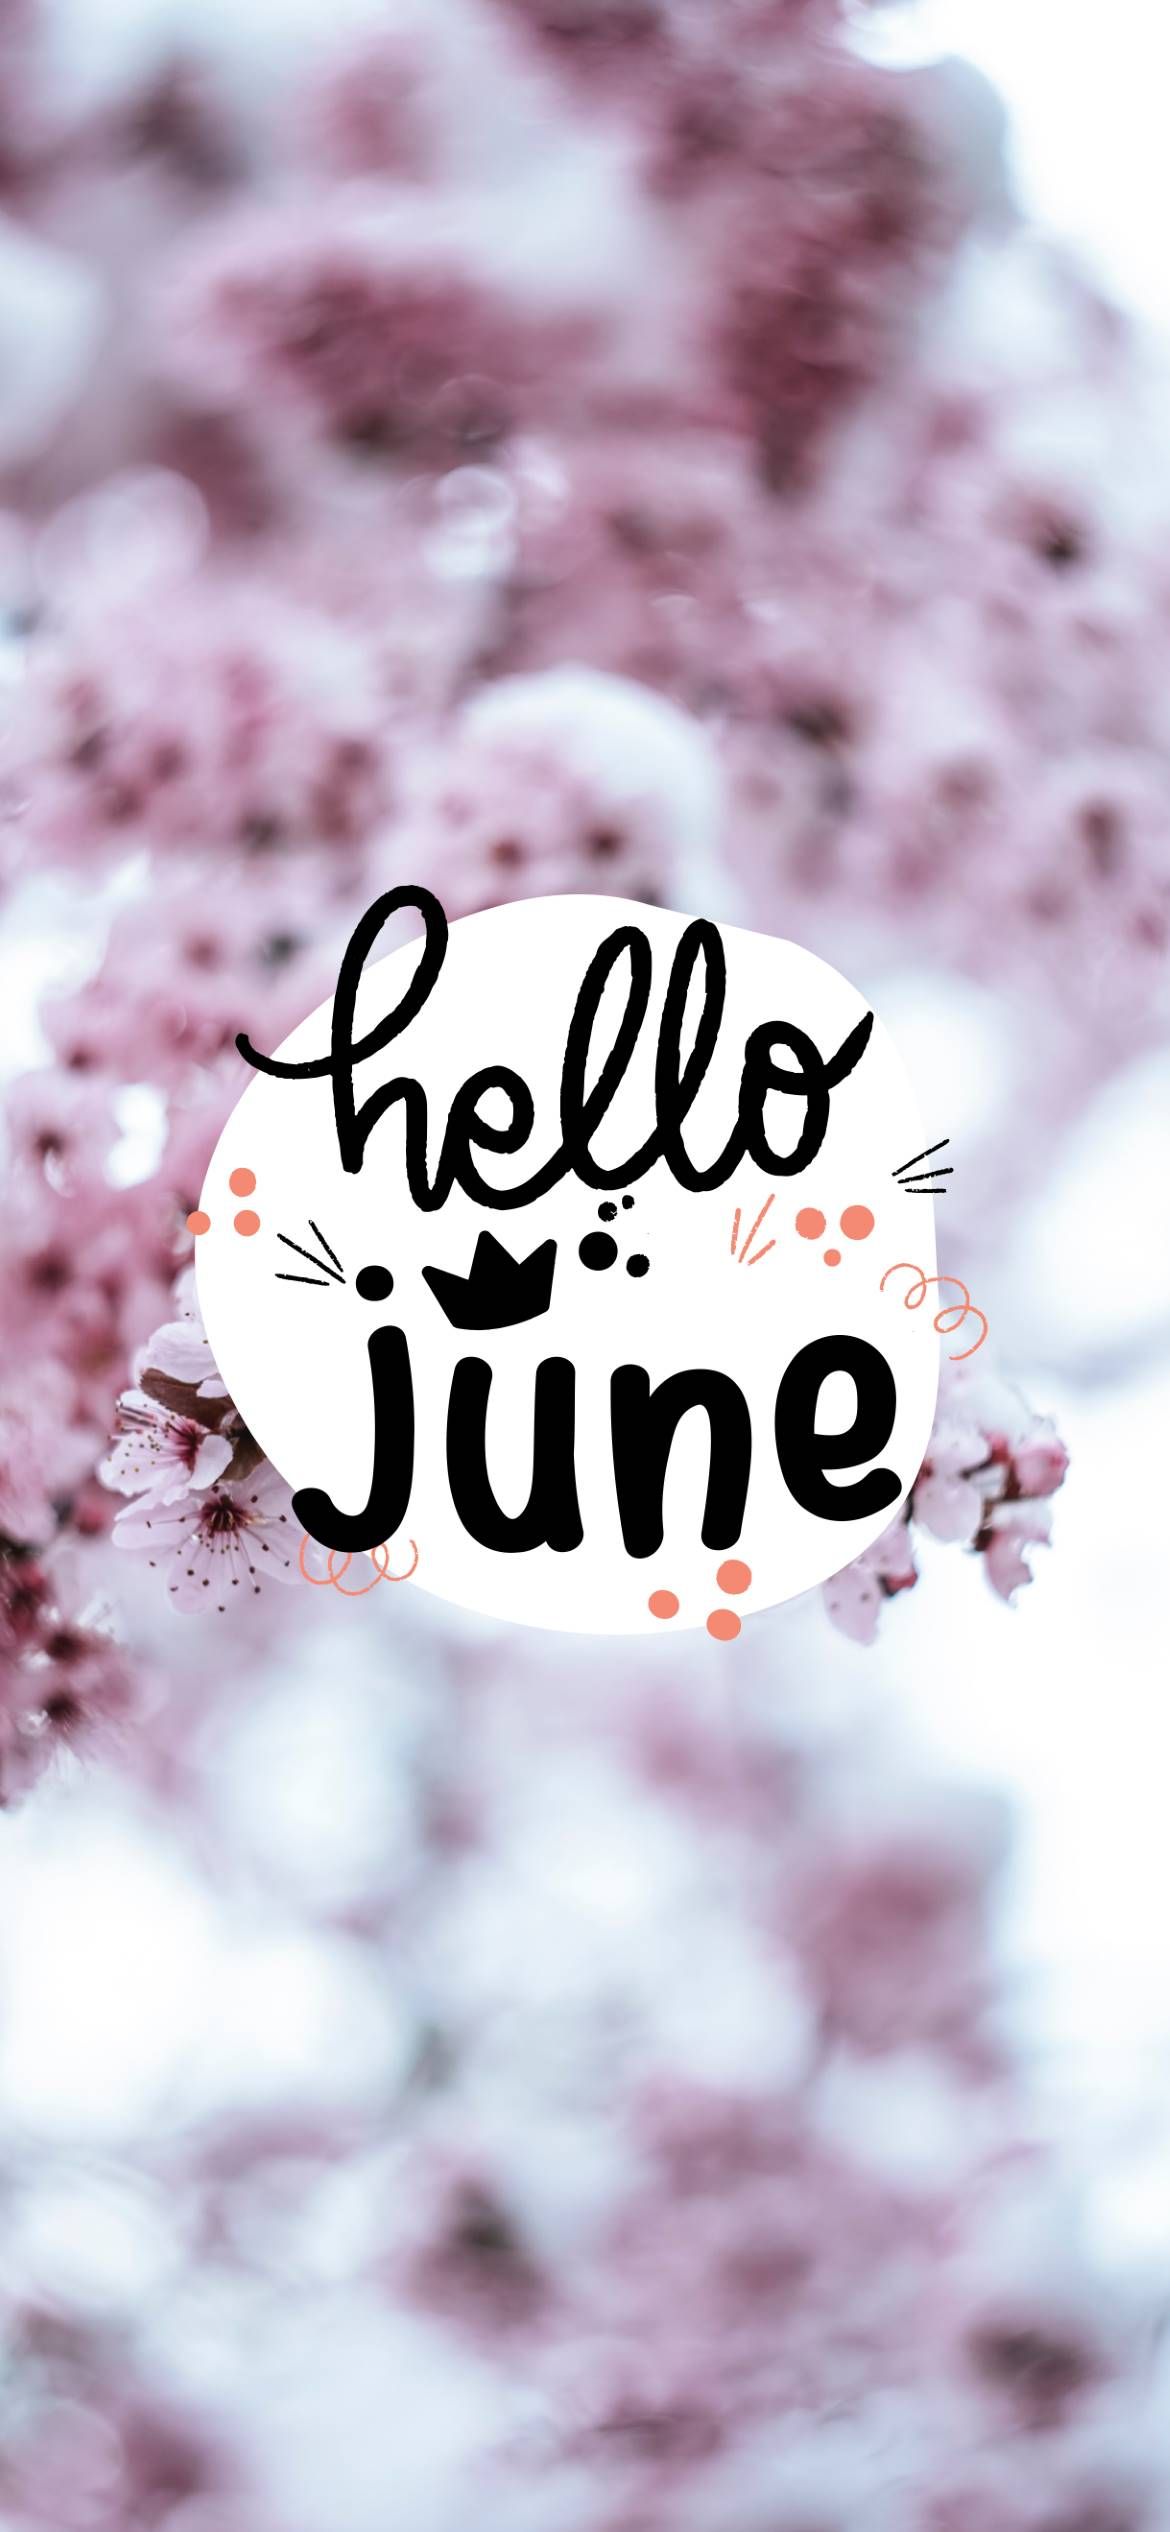 Hello June wallpaper for your phone. - June